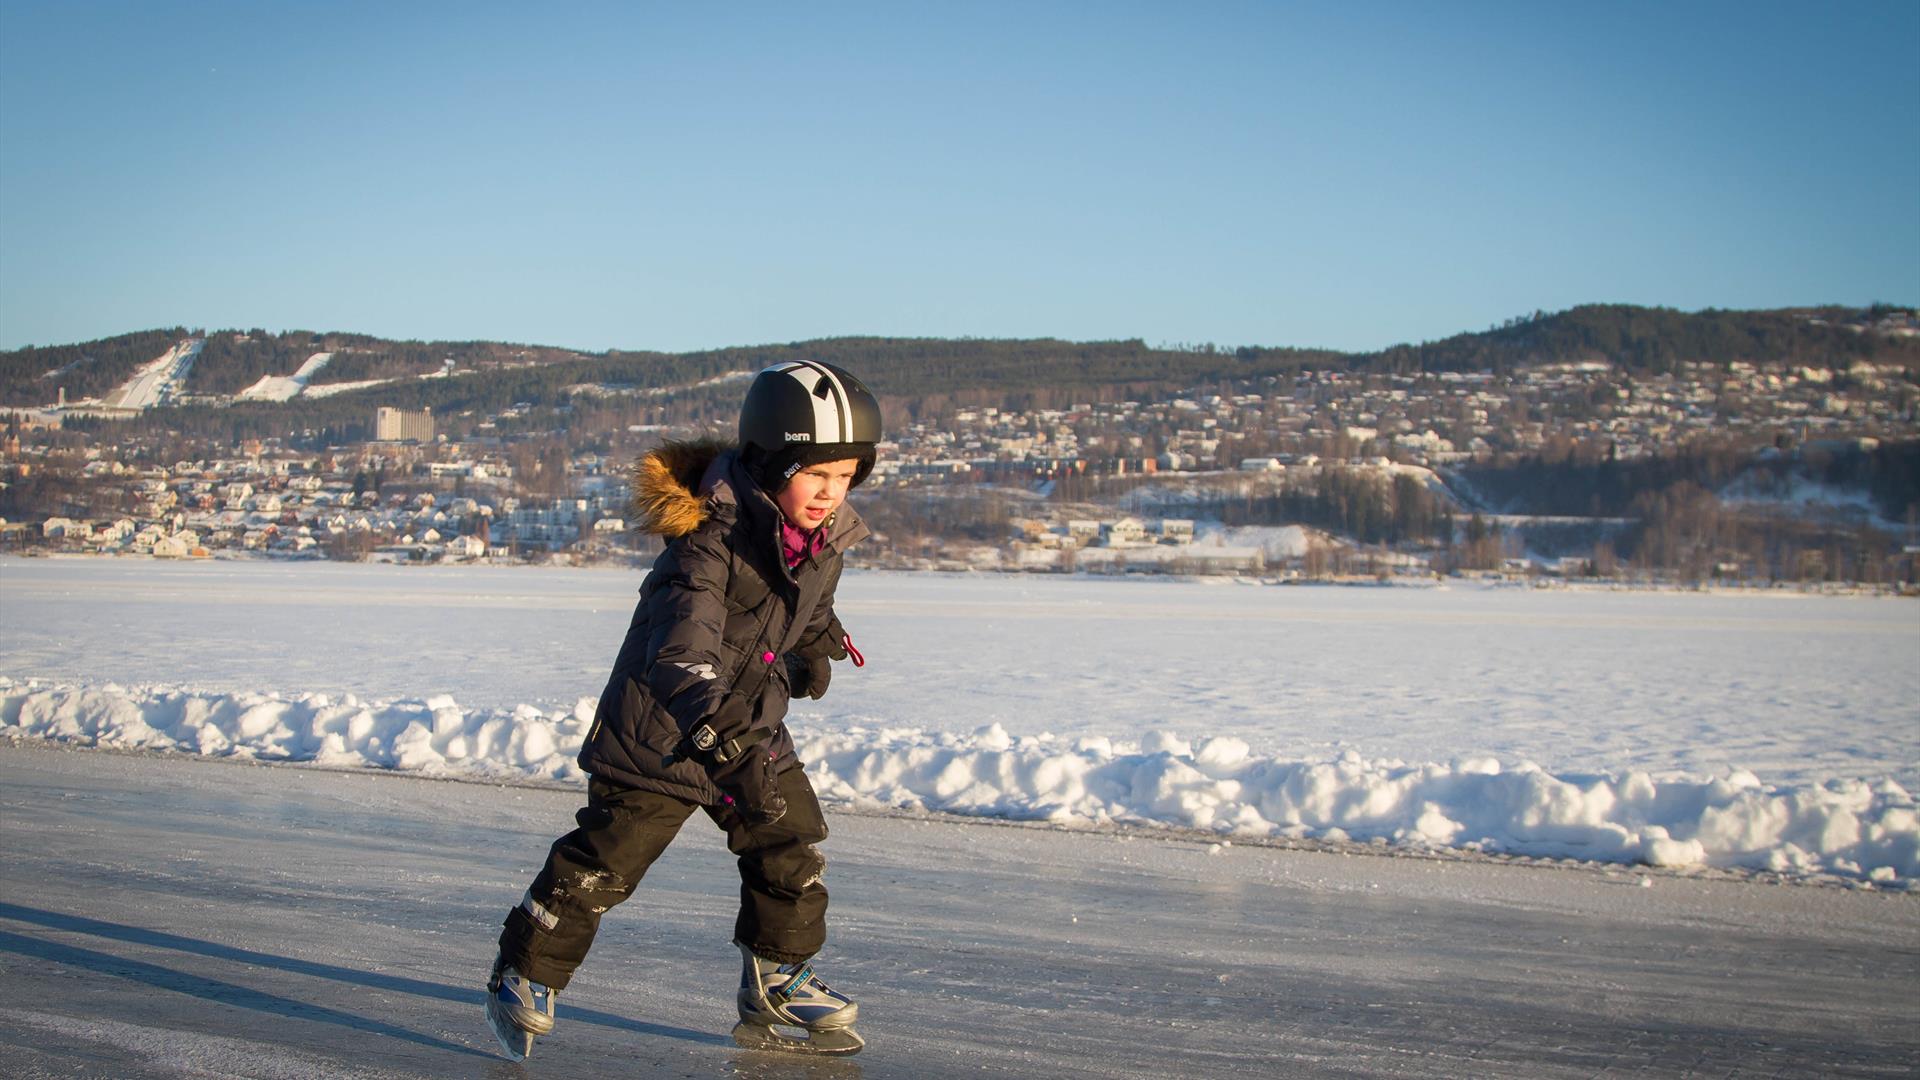 Kid ice skating on the lake Mjøsa